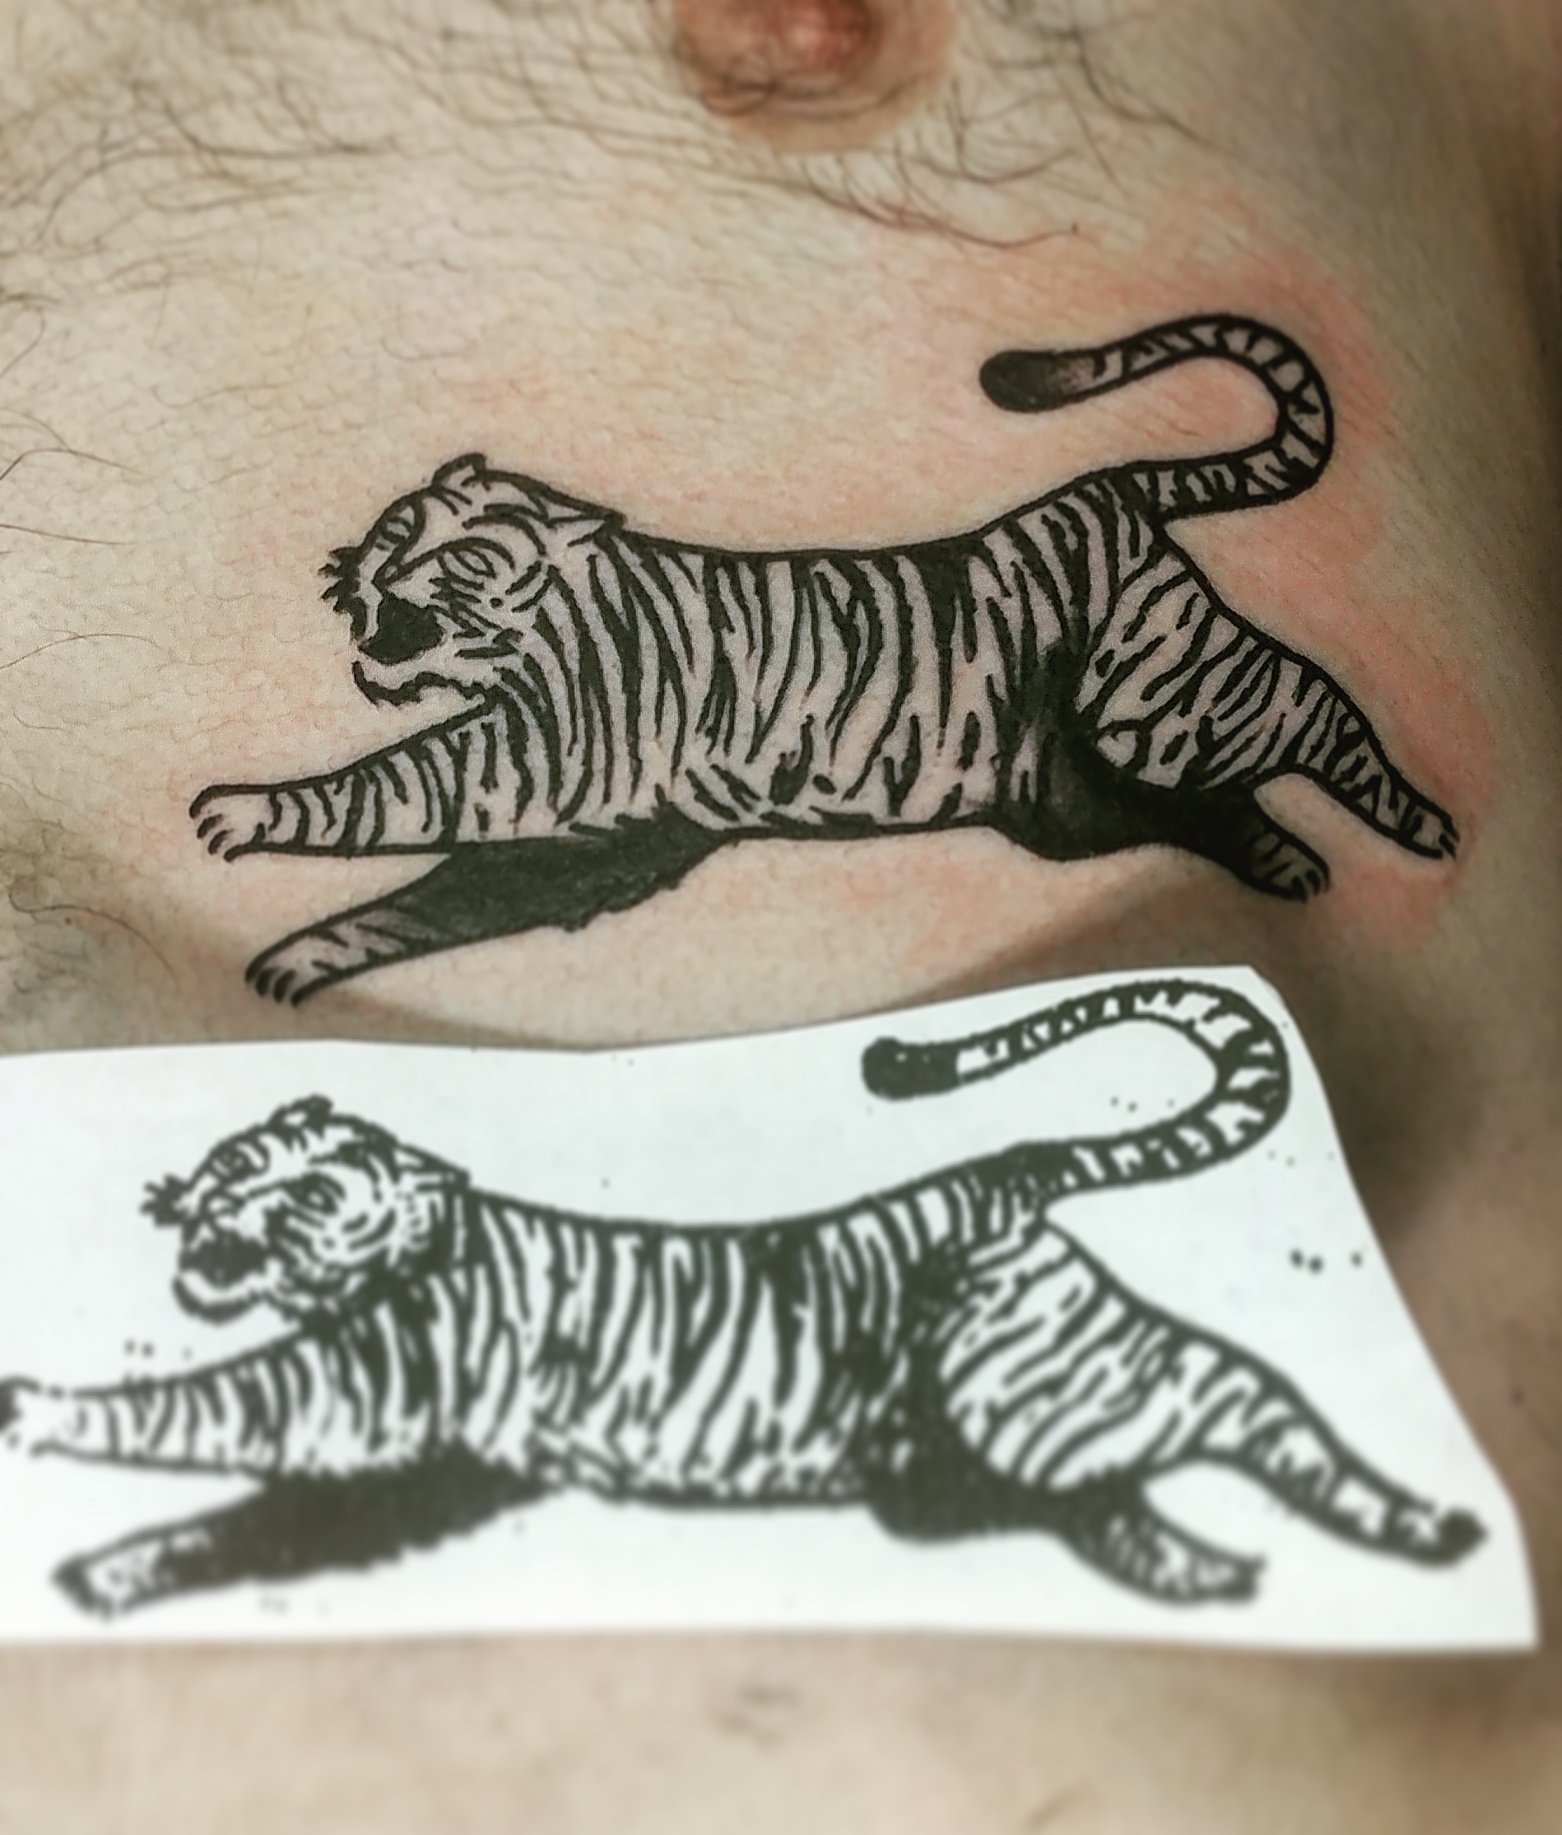 Tiger armband tattoo | Arm band tattoo, Forearm band tattoos, Wrist tattoos  for guys